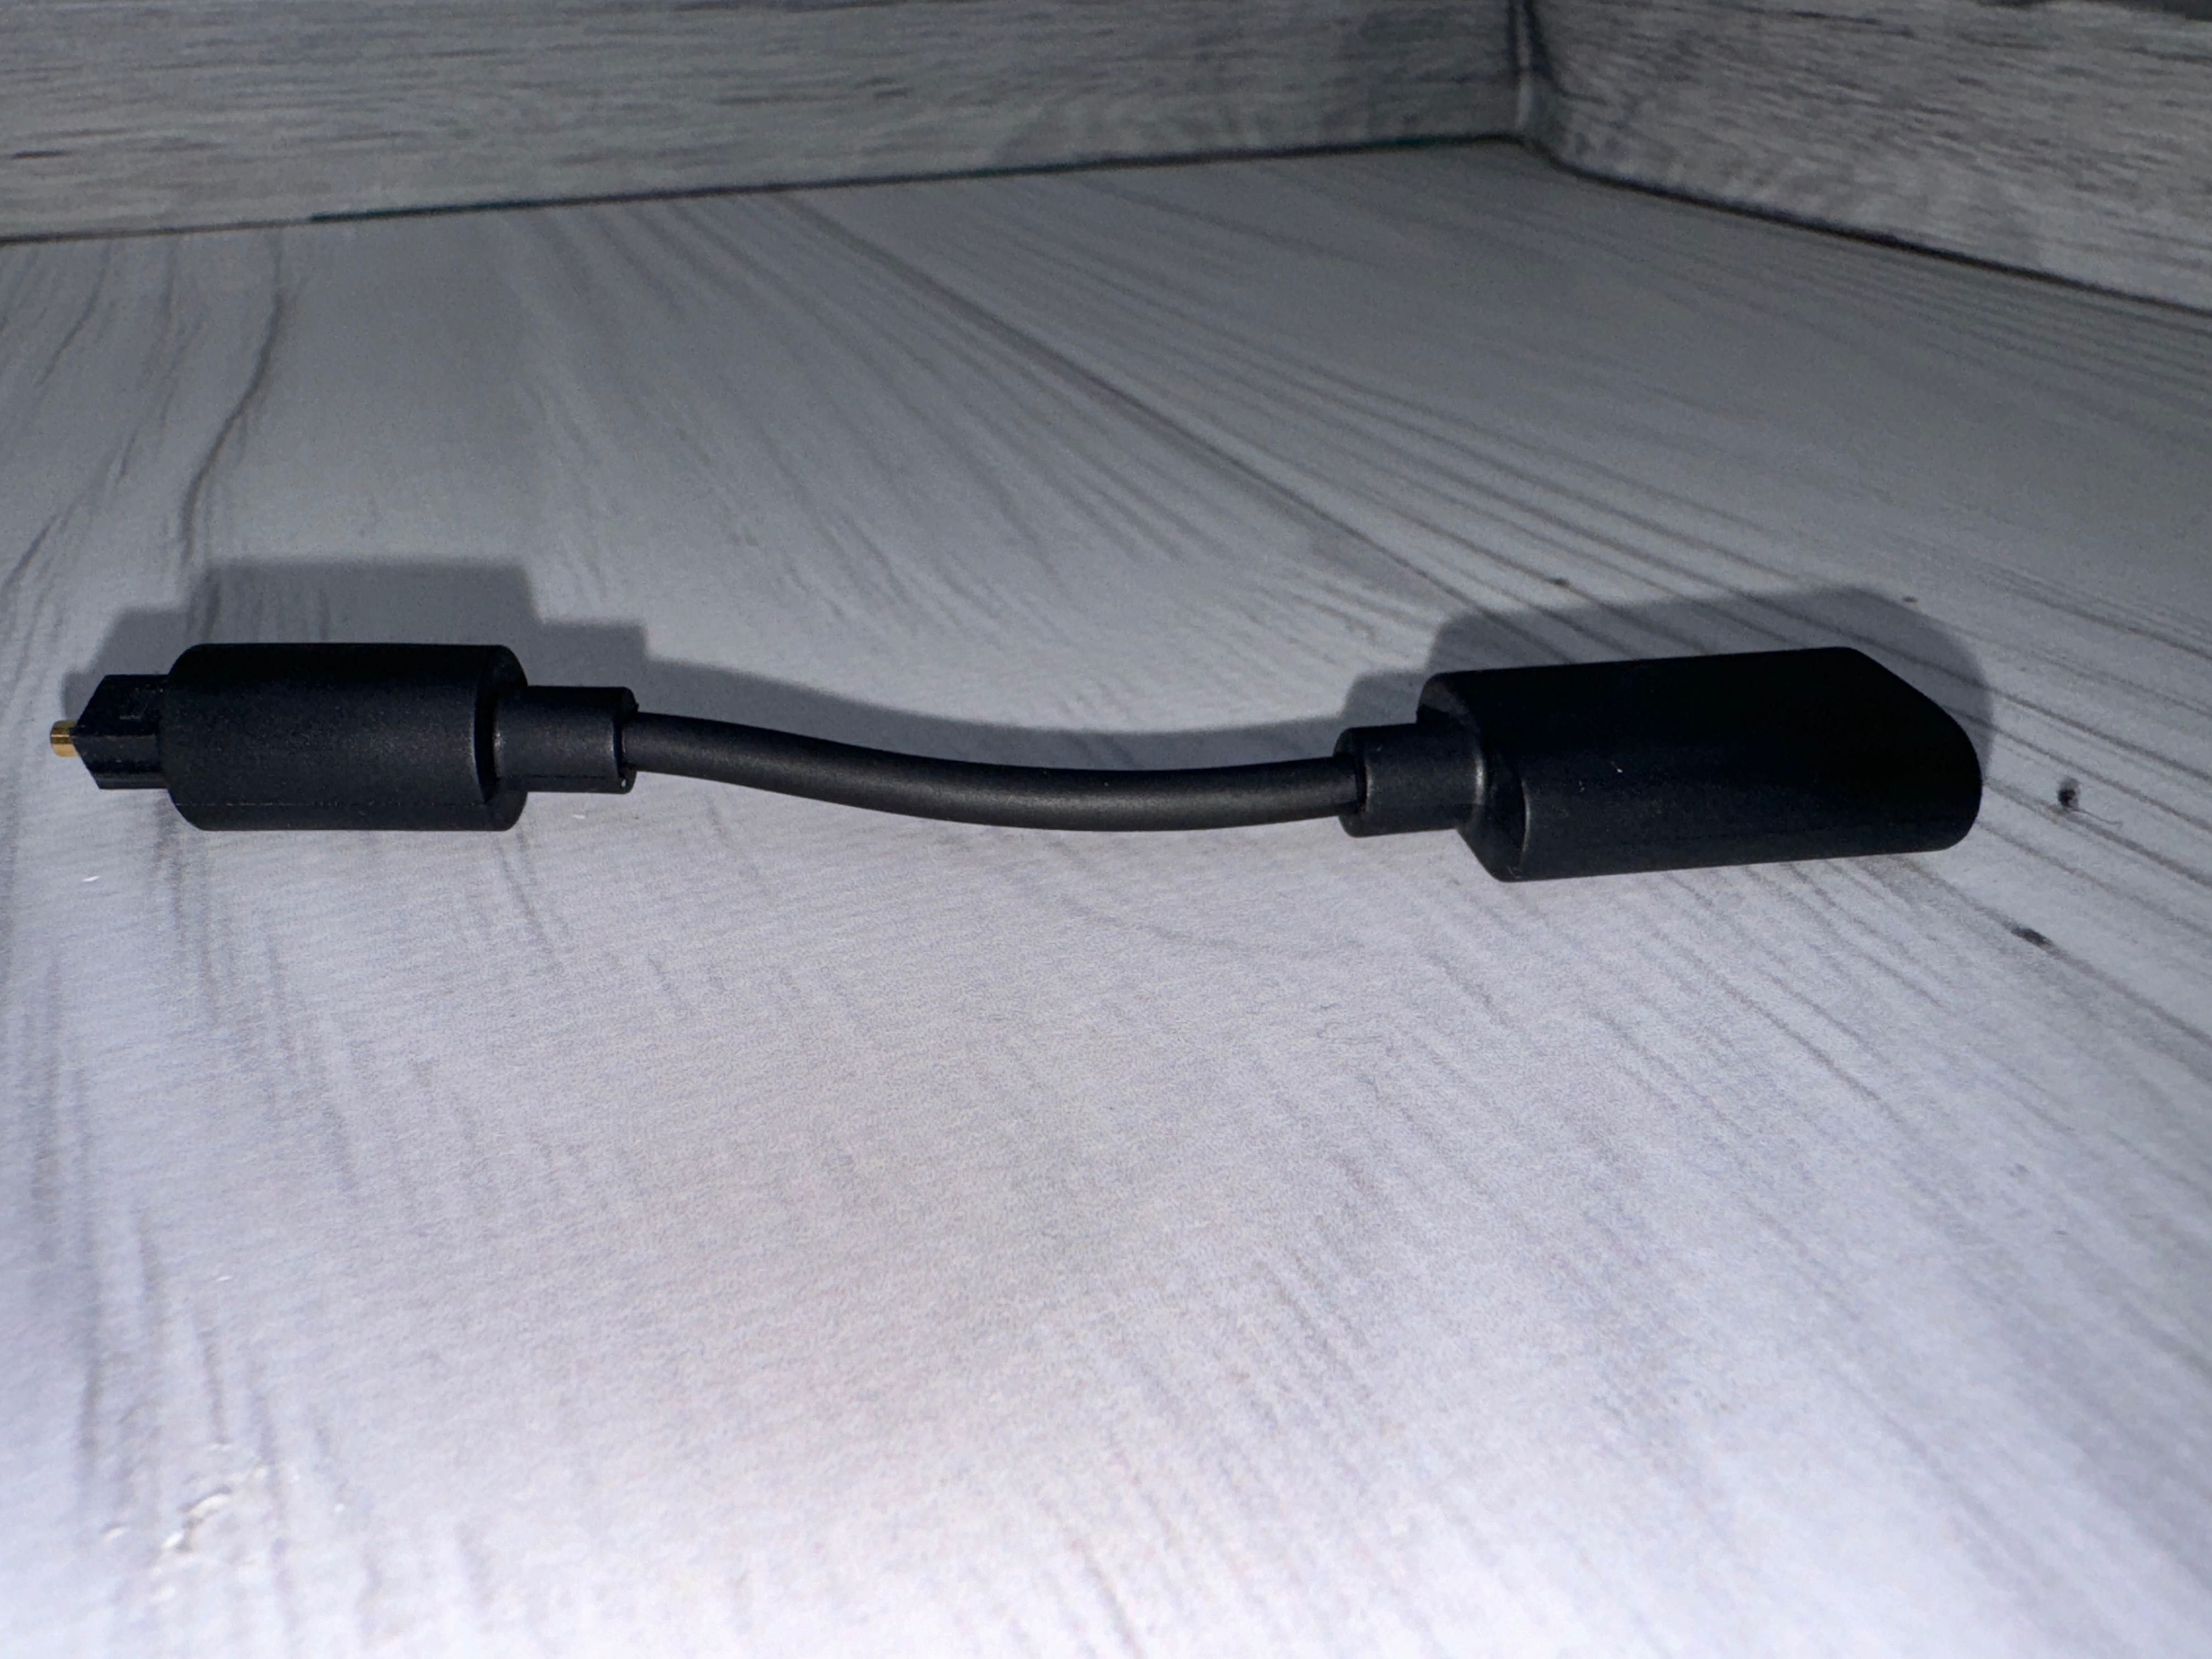 Sonos Optical To HDMI Audio адаптер (обмен/продажа)